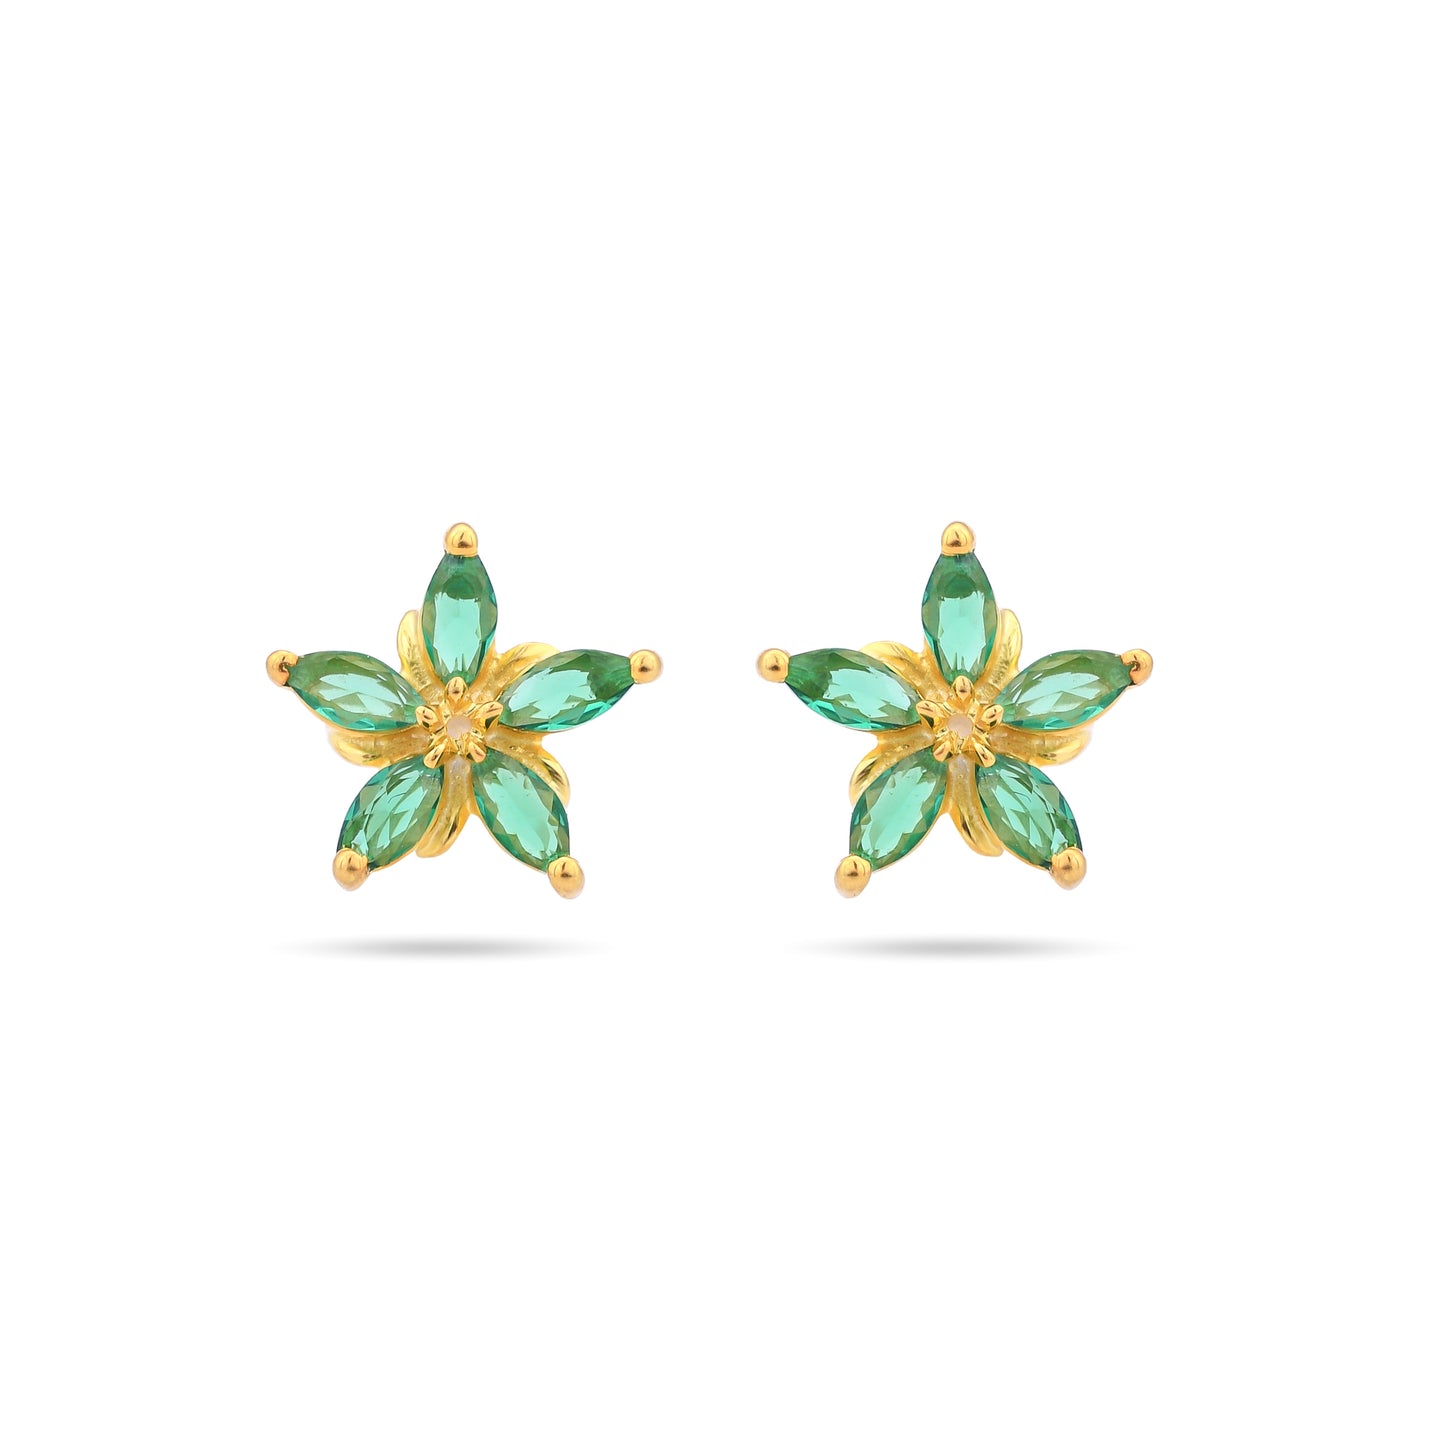 Green Emerald Garden Studs Earrings 925 Silver| Gold Plated